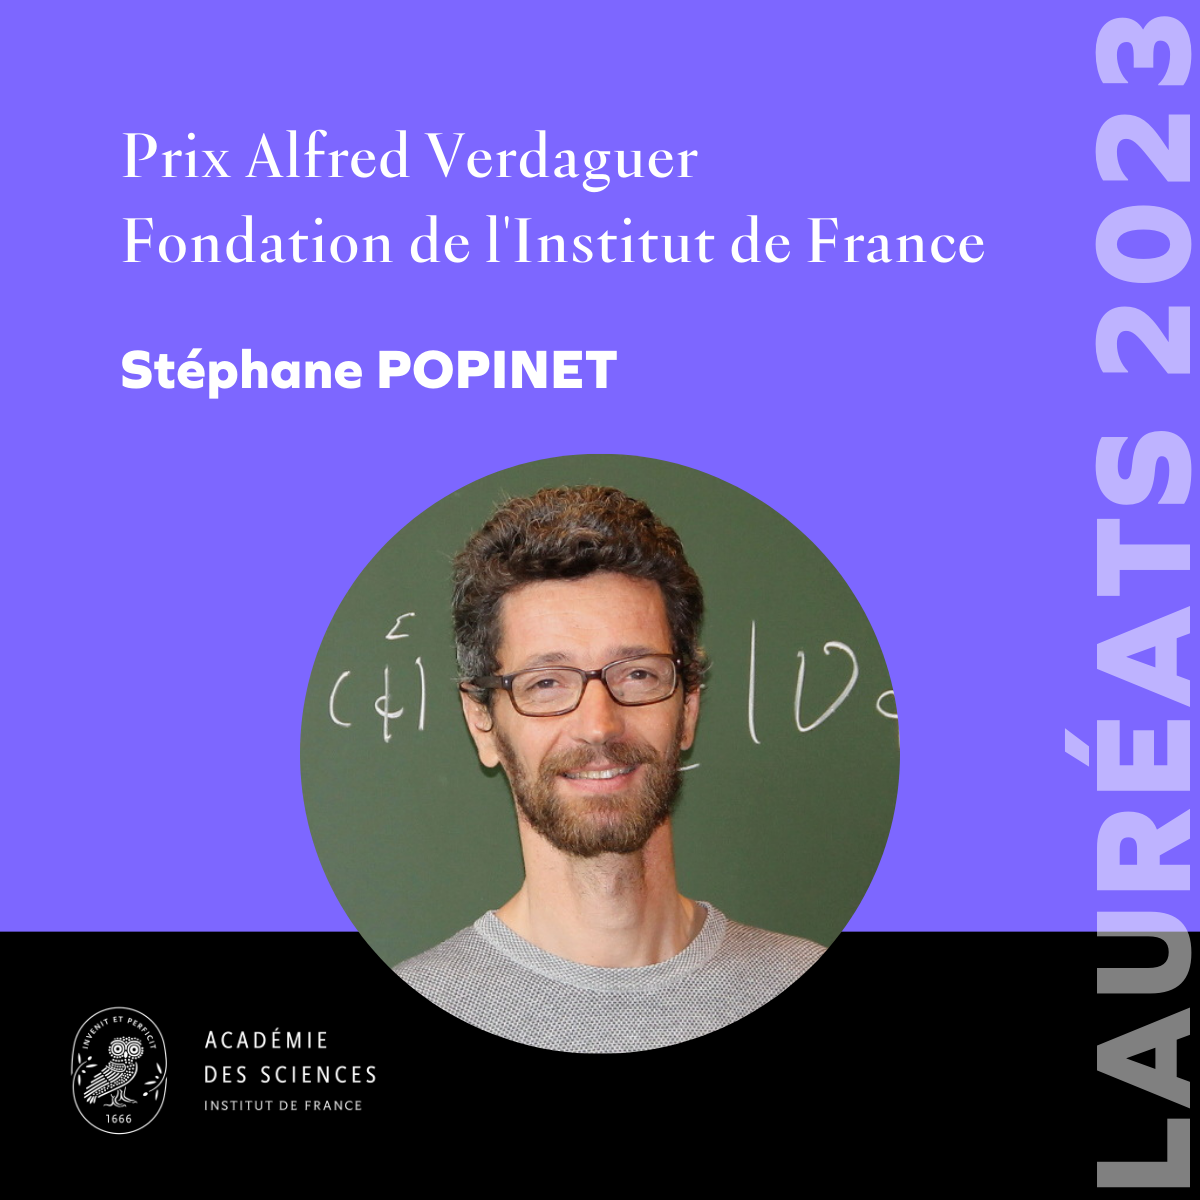 Stéphane Popinet